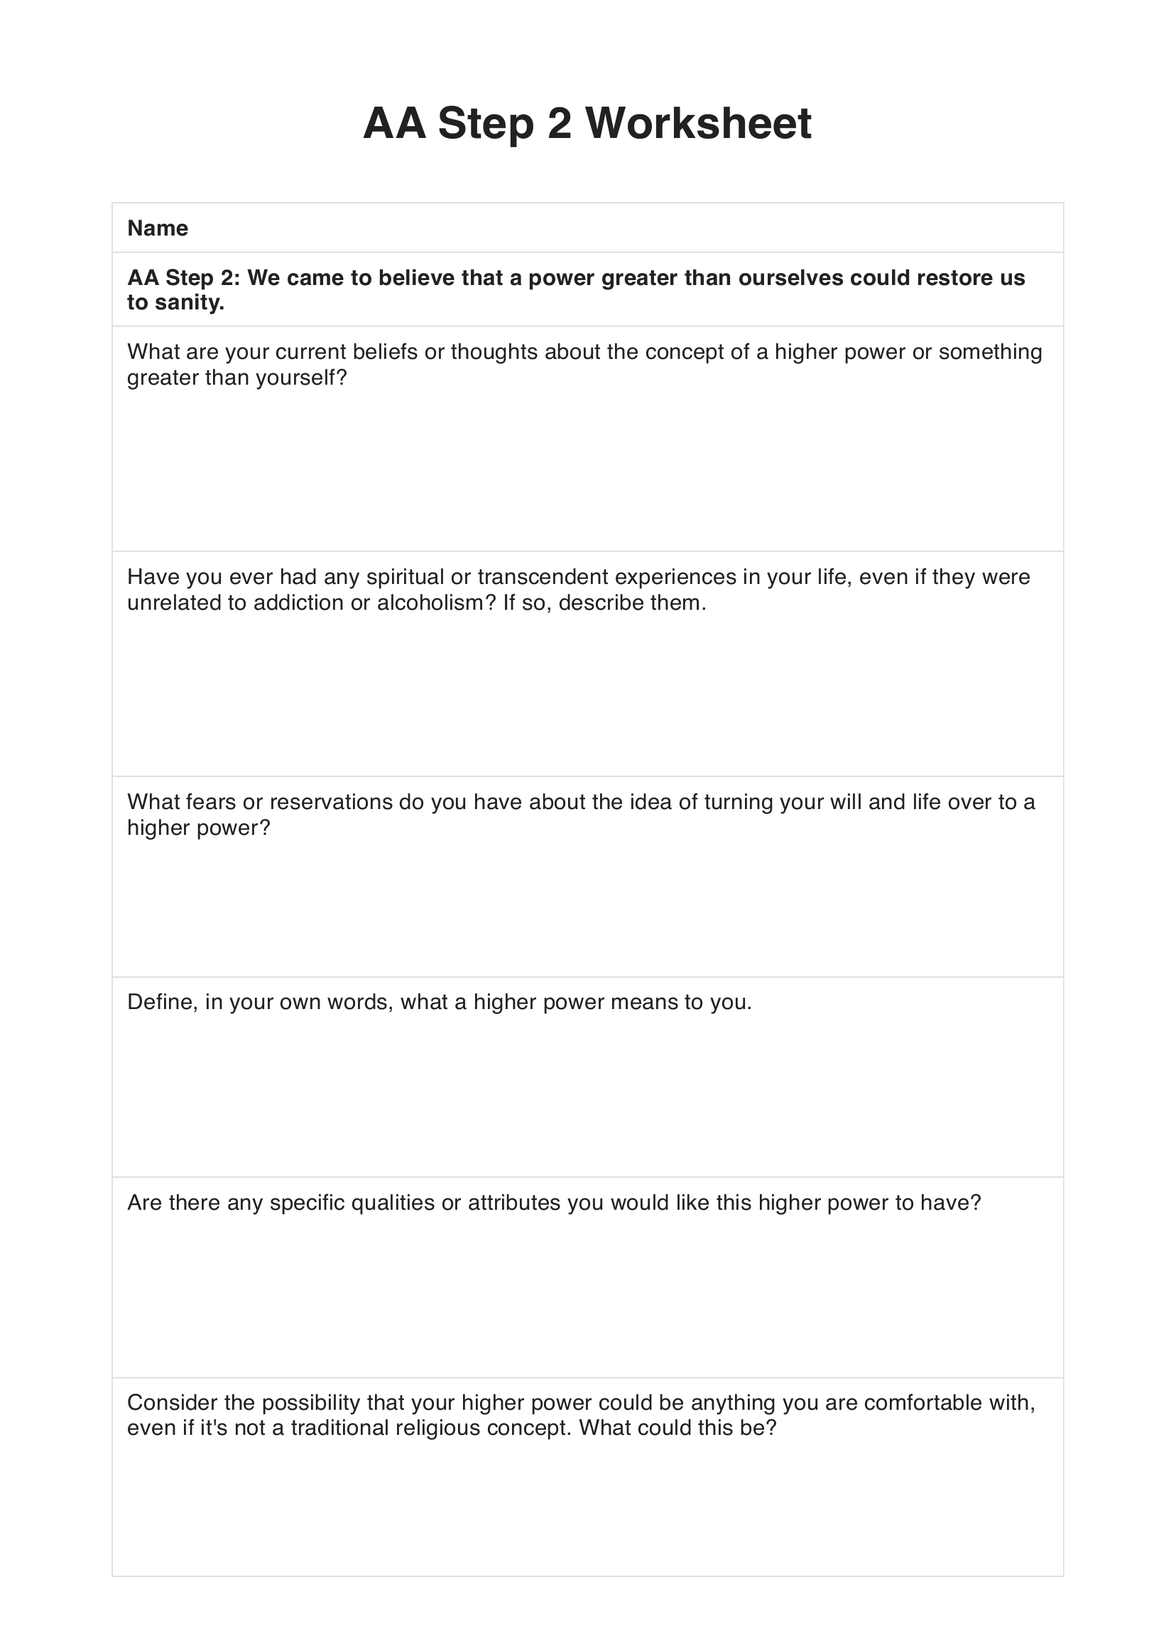 AA Step 2 Worksheets PDF Example